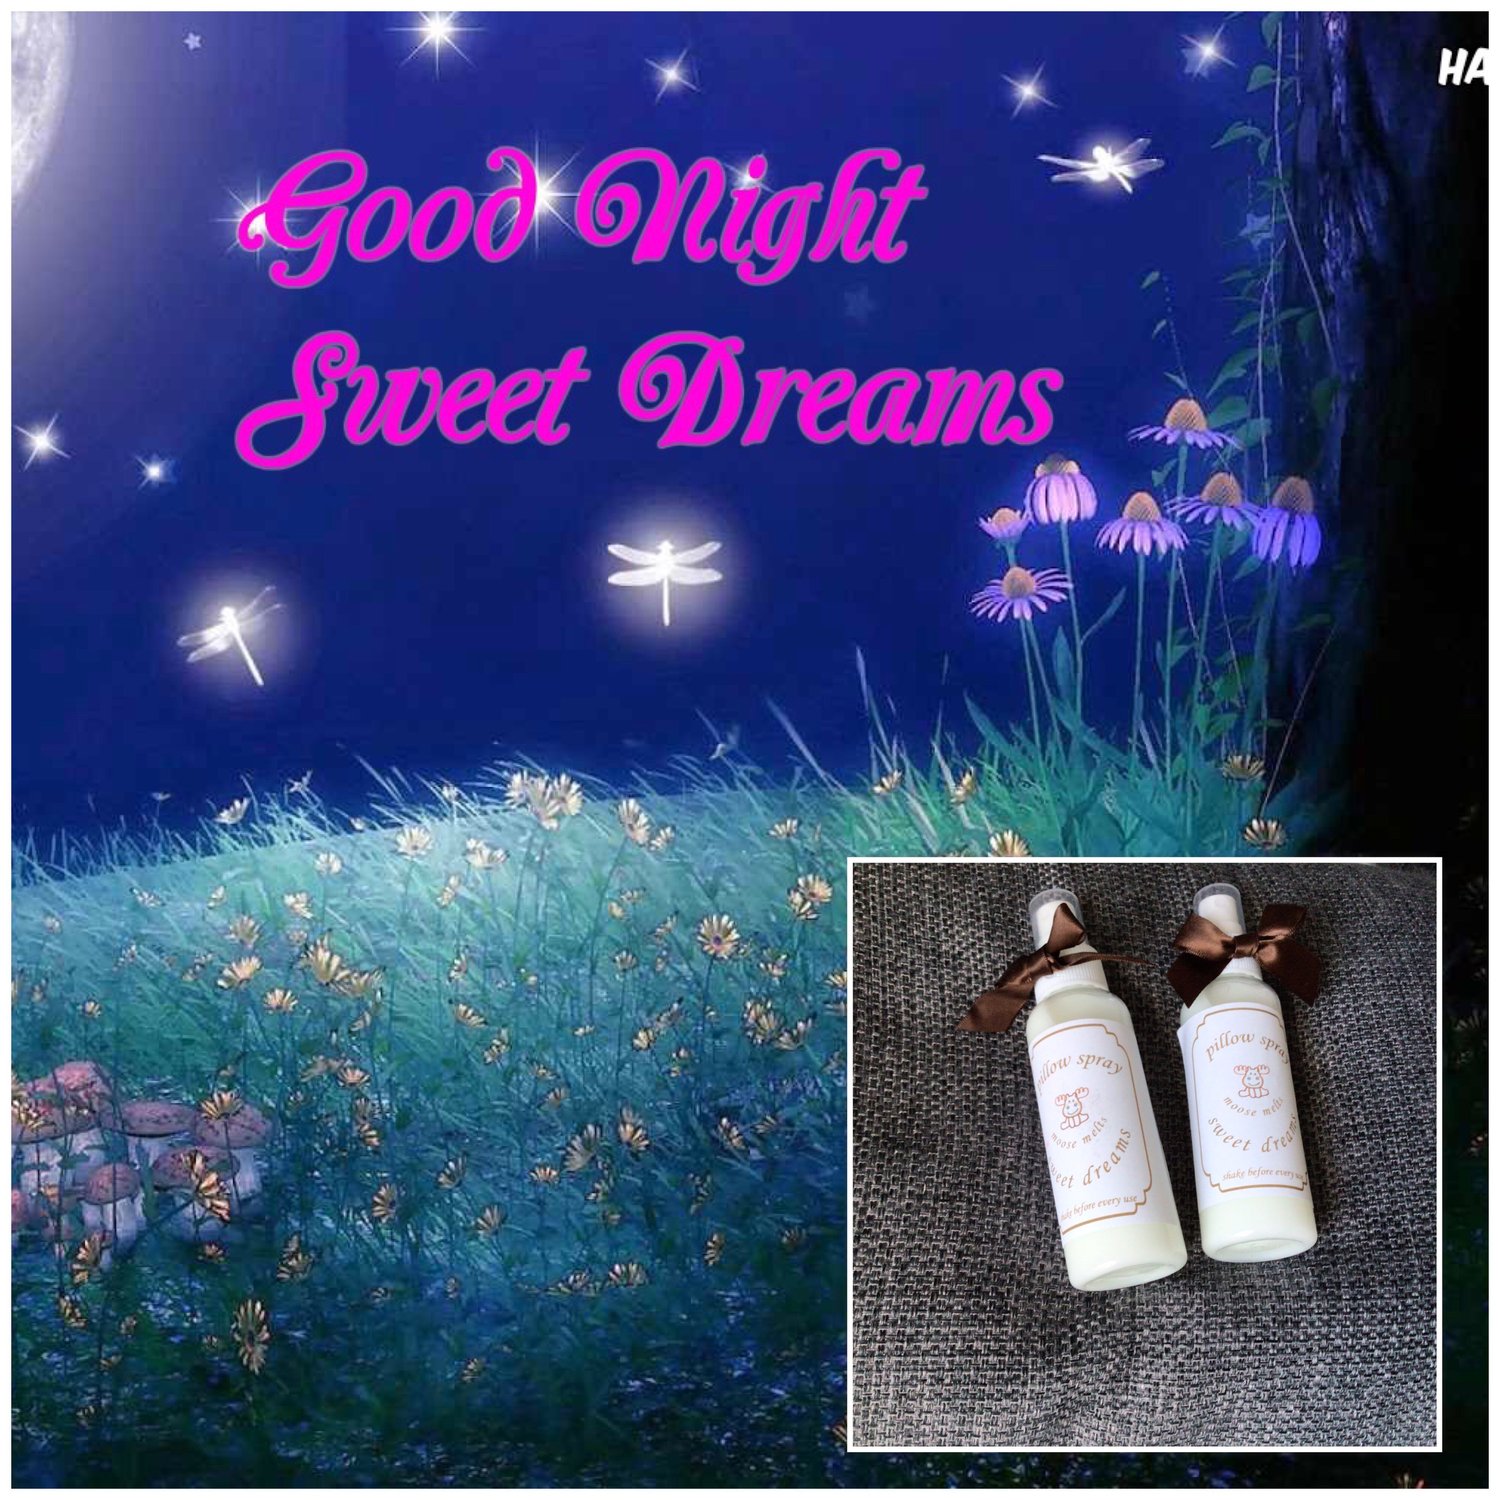 Sweet Dreams Pillow Spray